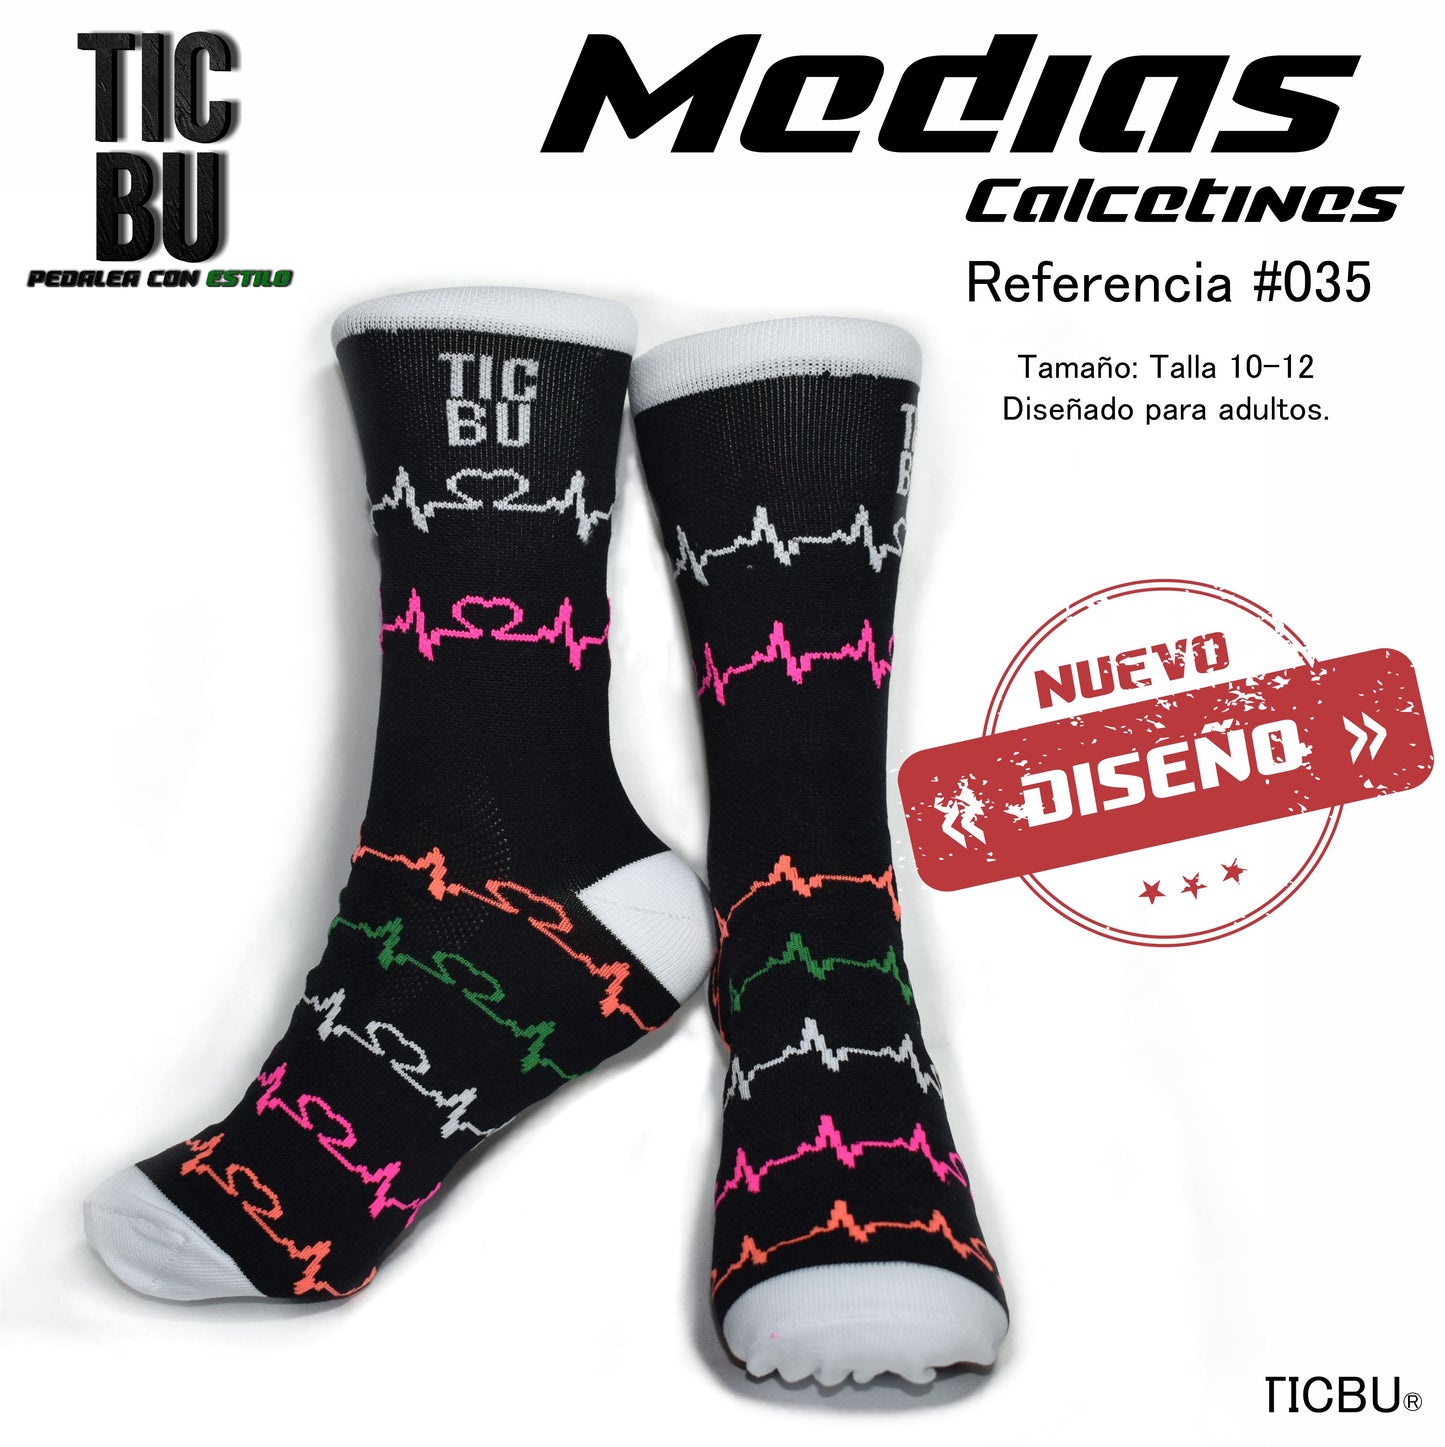 TICBU socks Ref 035